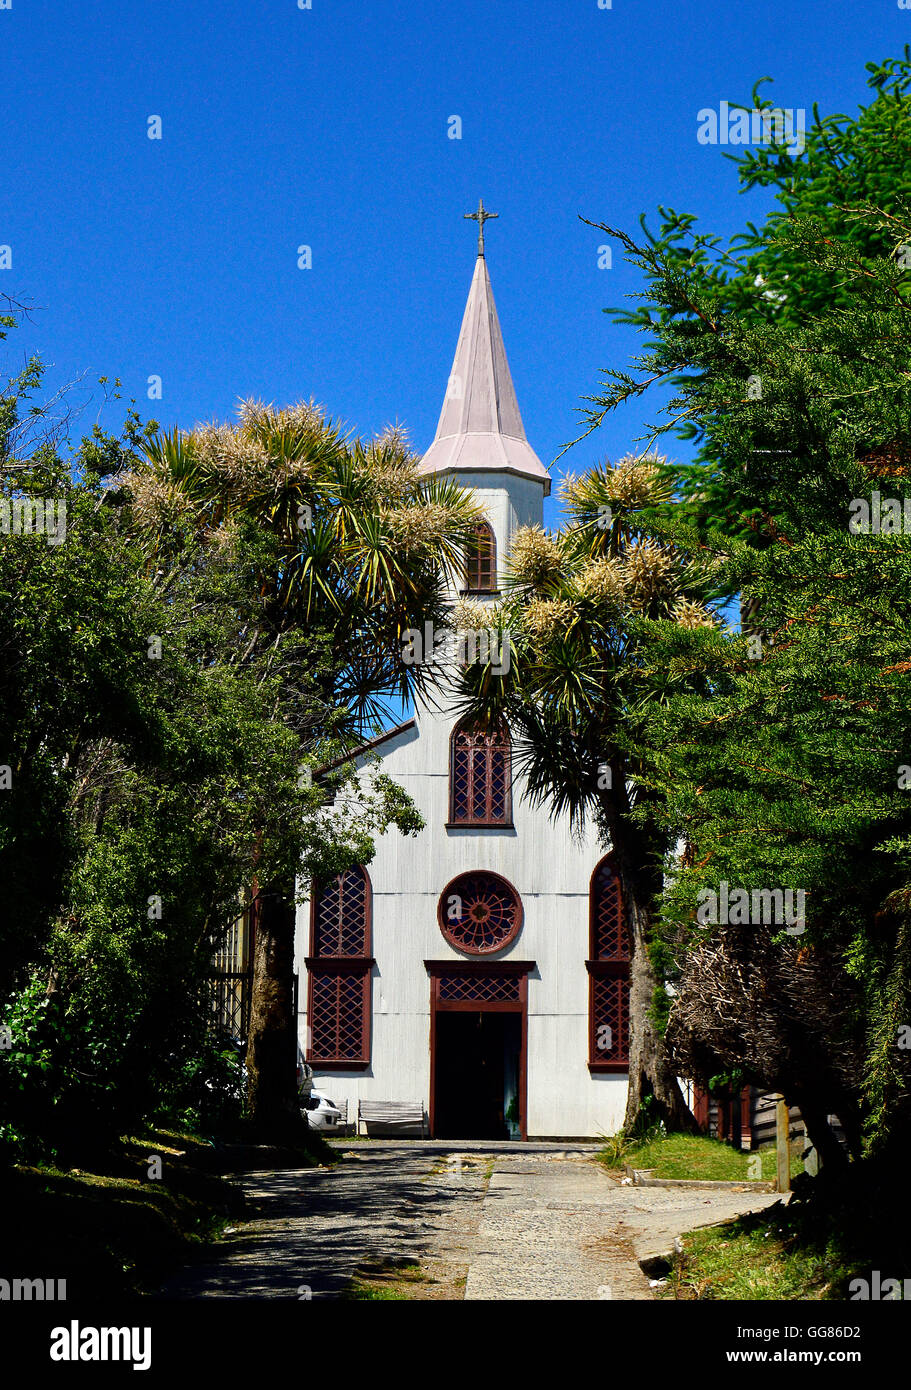 Exterior of the former Iglesia de la Inmaculada Concepcion, which now houses the Museo de las Iglesias de Chiloe, Ancud, Chile Stock Photo